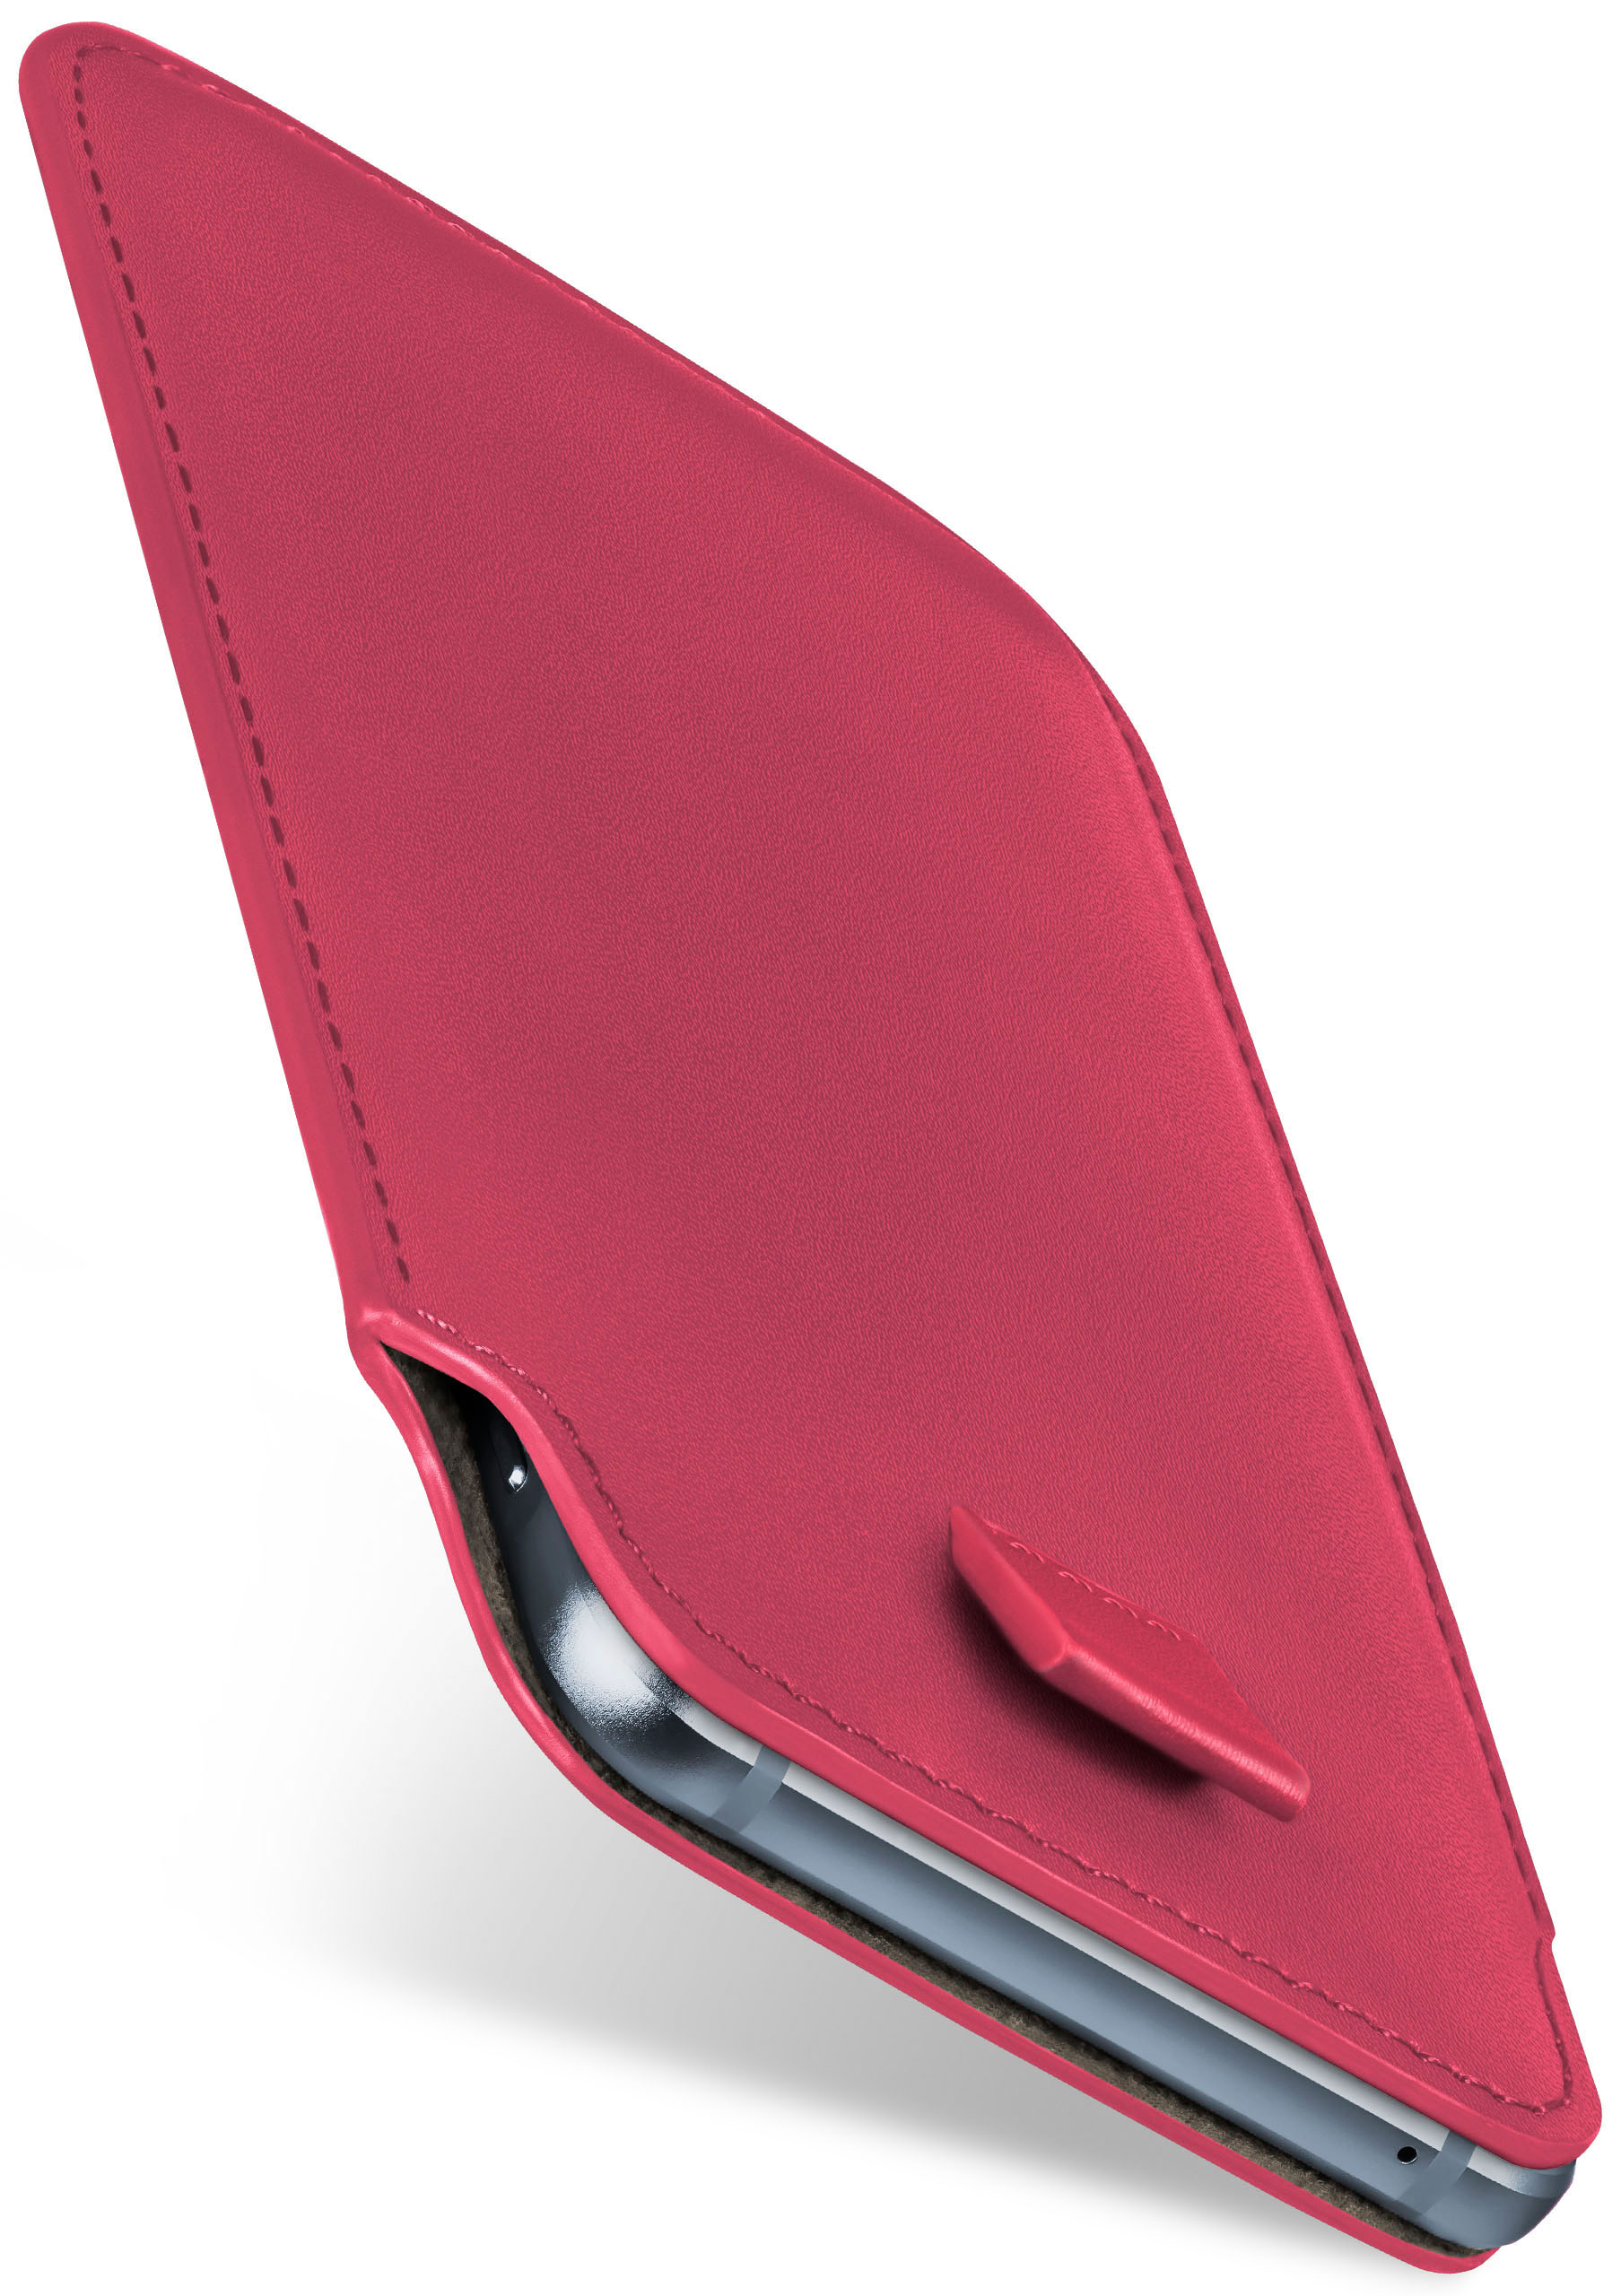 Slide A3 Cover, Samsung, MOEX Berry-Fuchsia Full (2015), Case, Galaxy